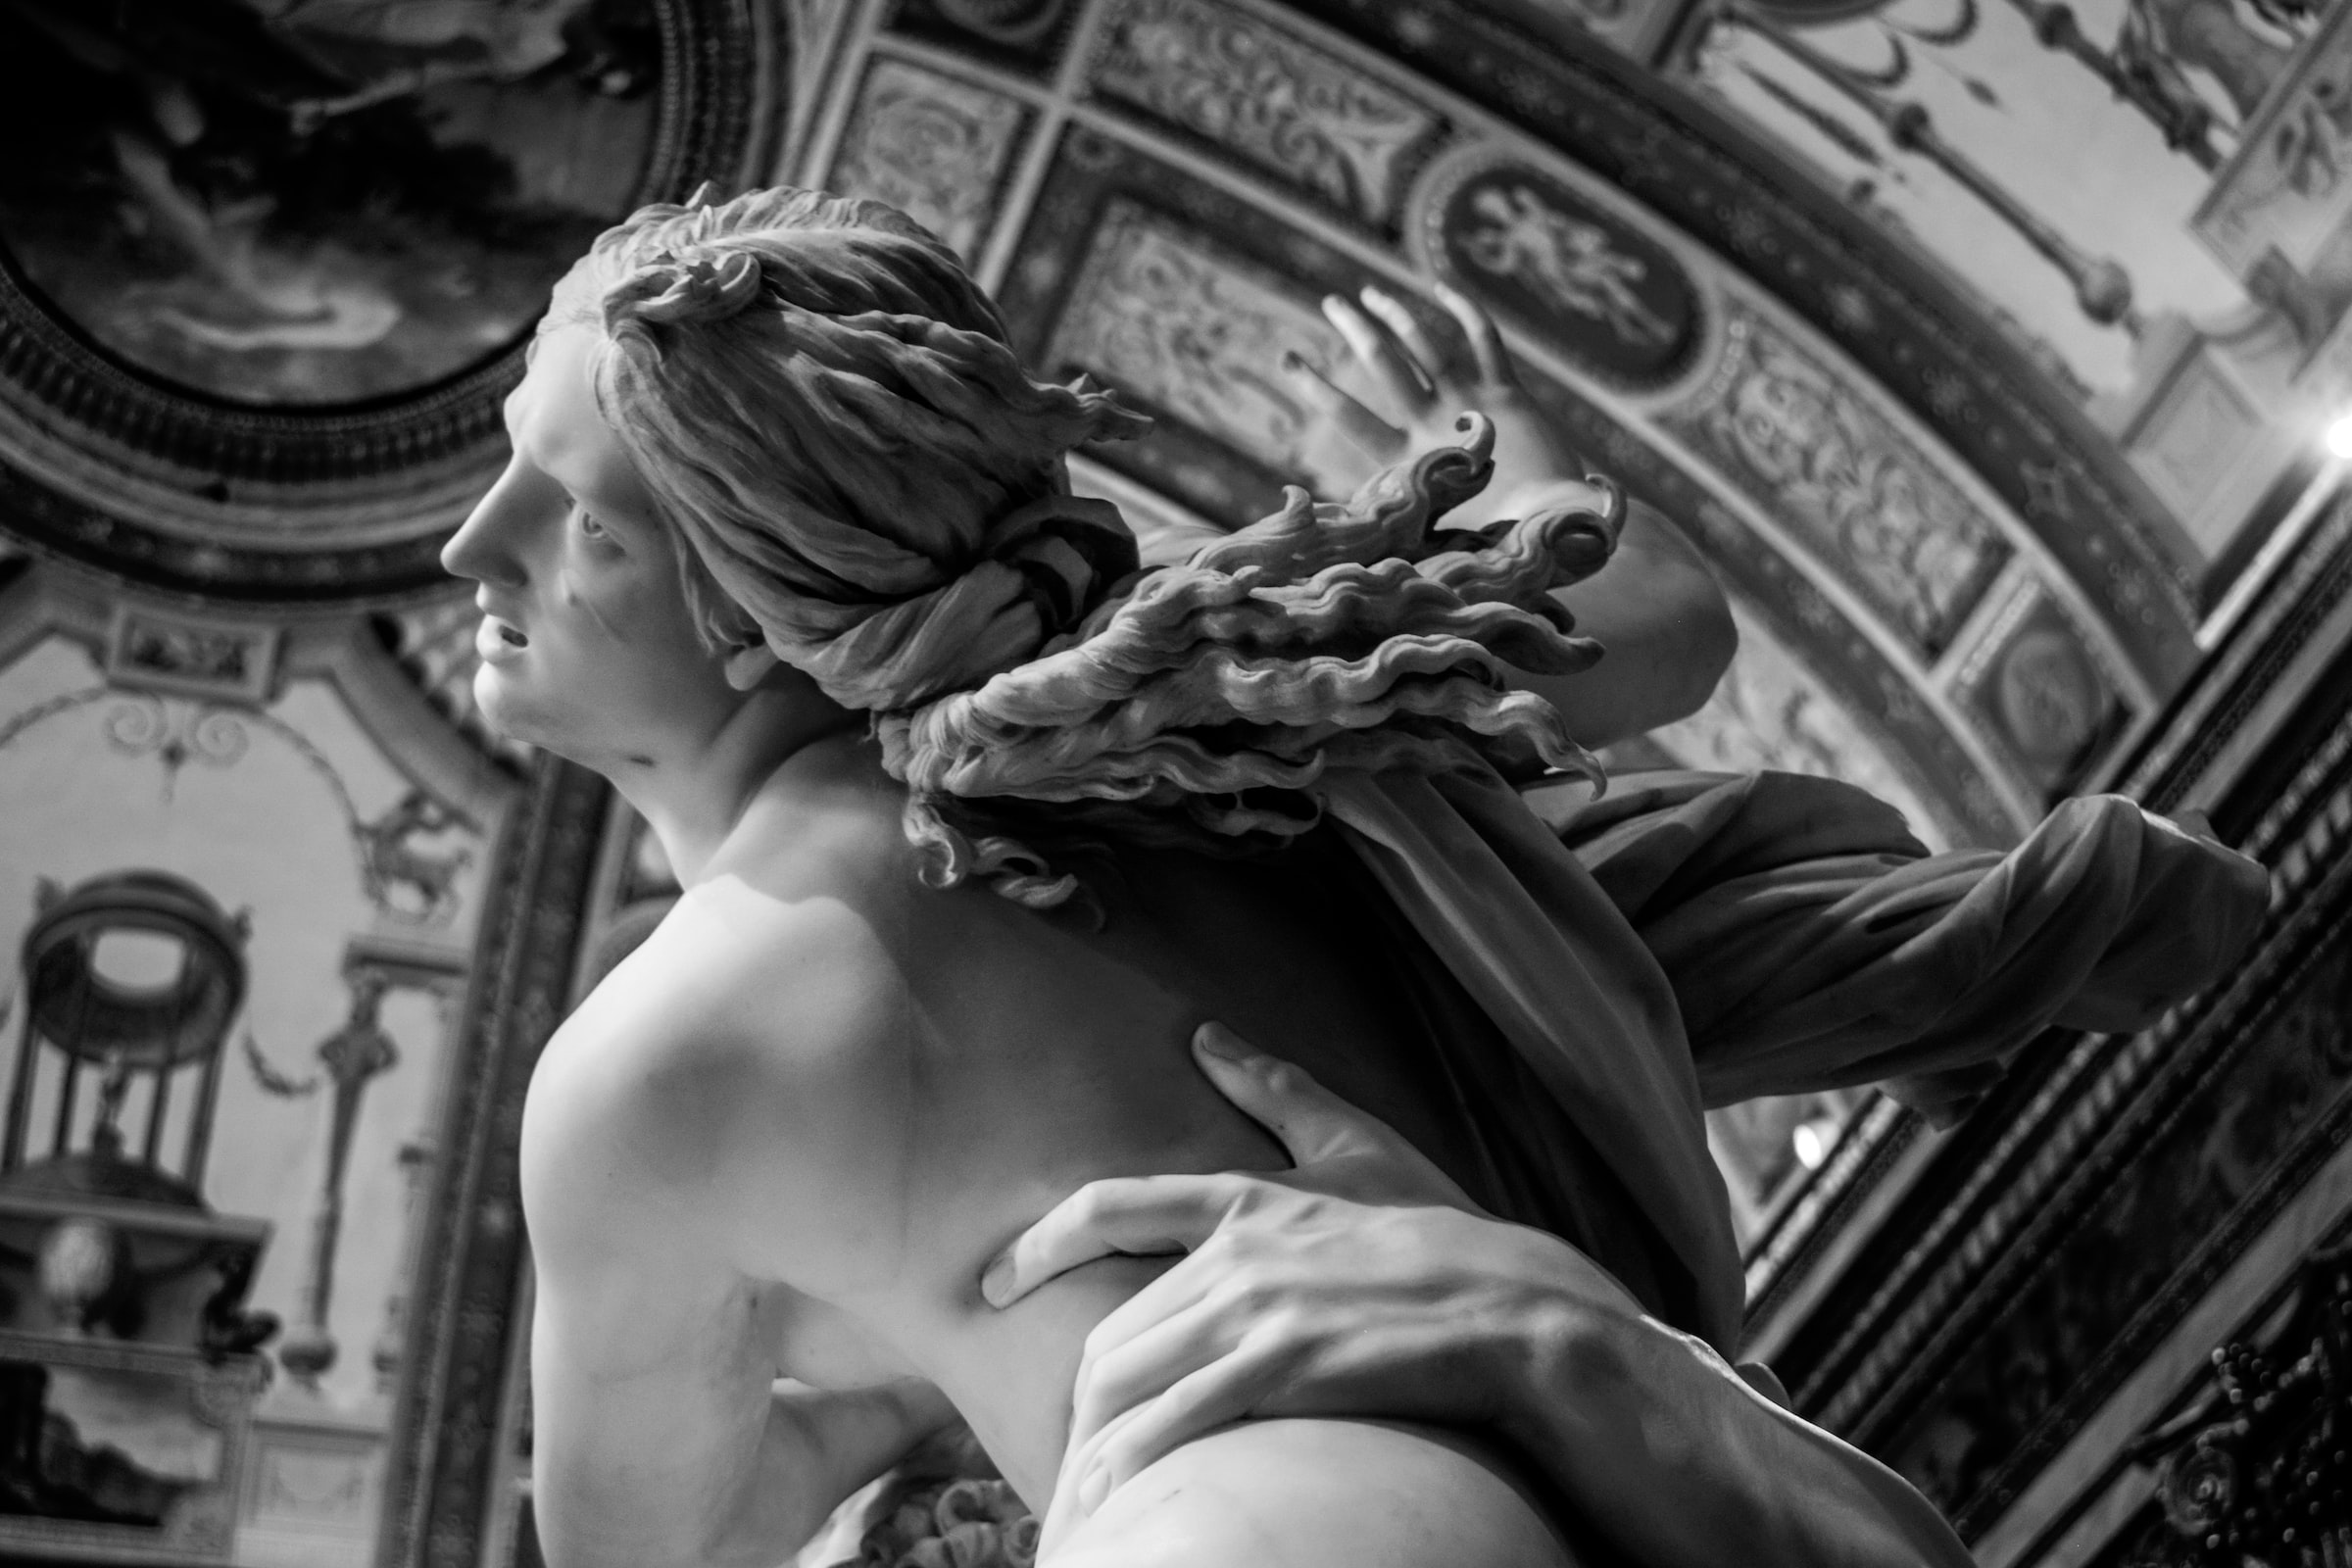 Borghese gallery skip the line Vip Private tour